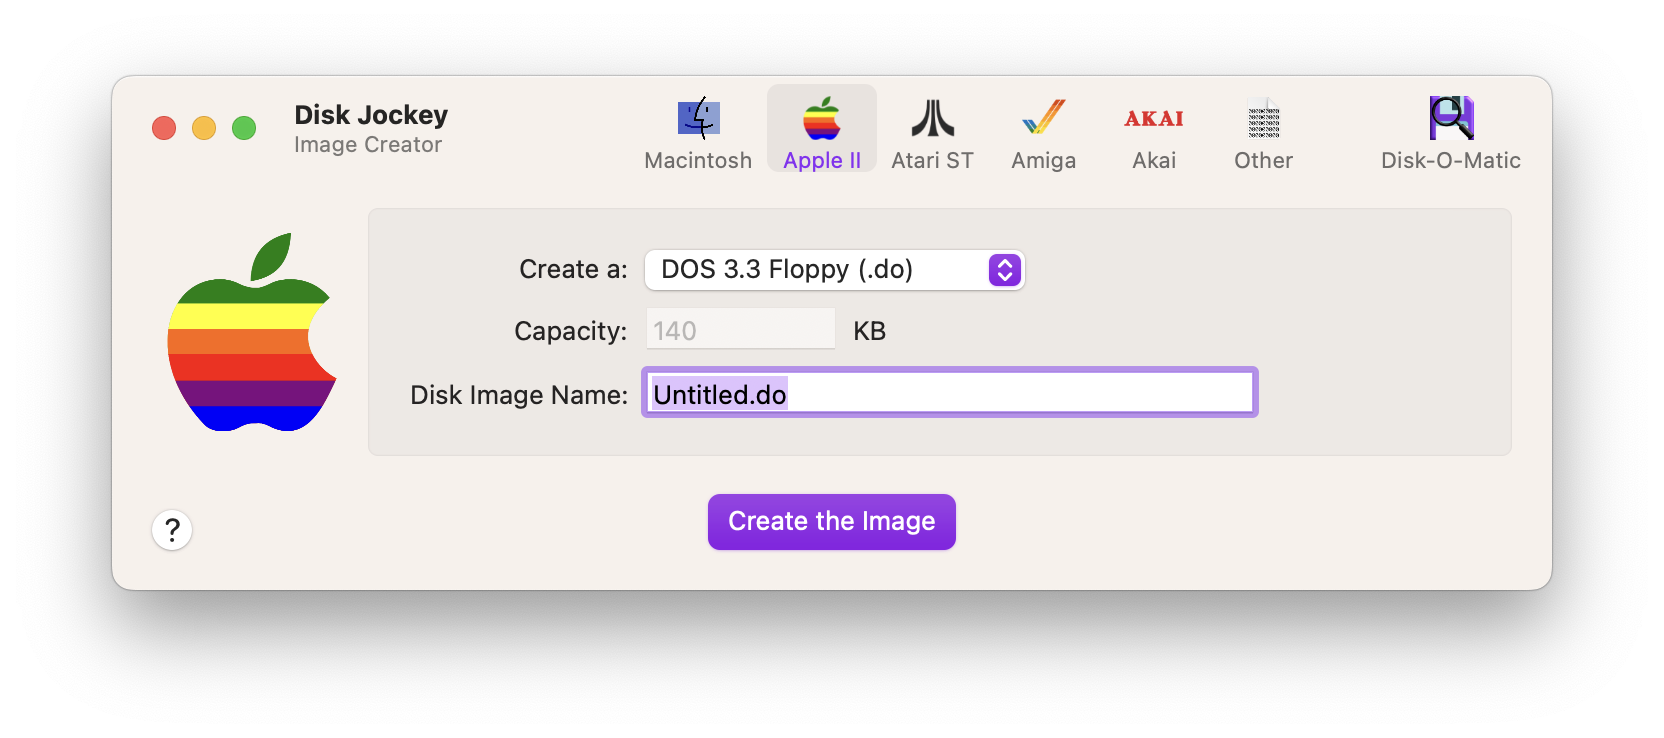 A screenshot of Disk Jockey with the Apple 2 image creator displayed